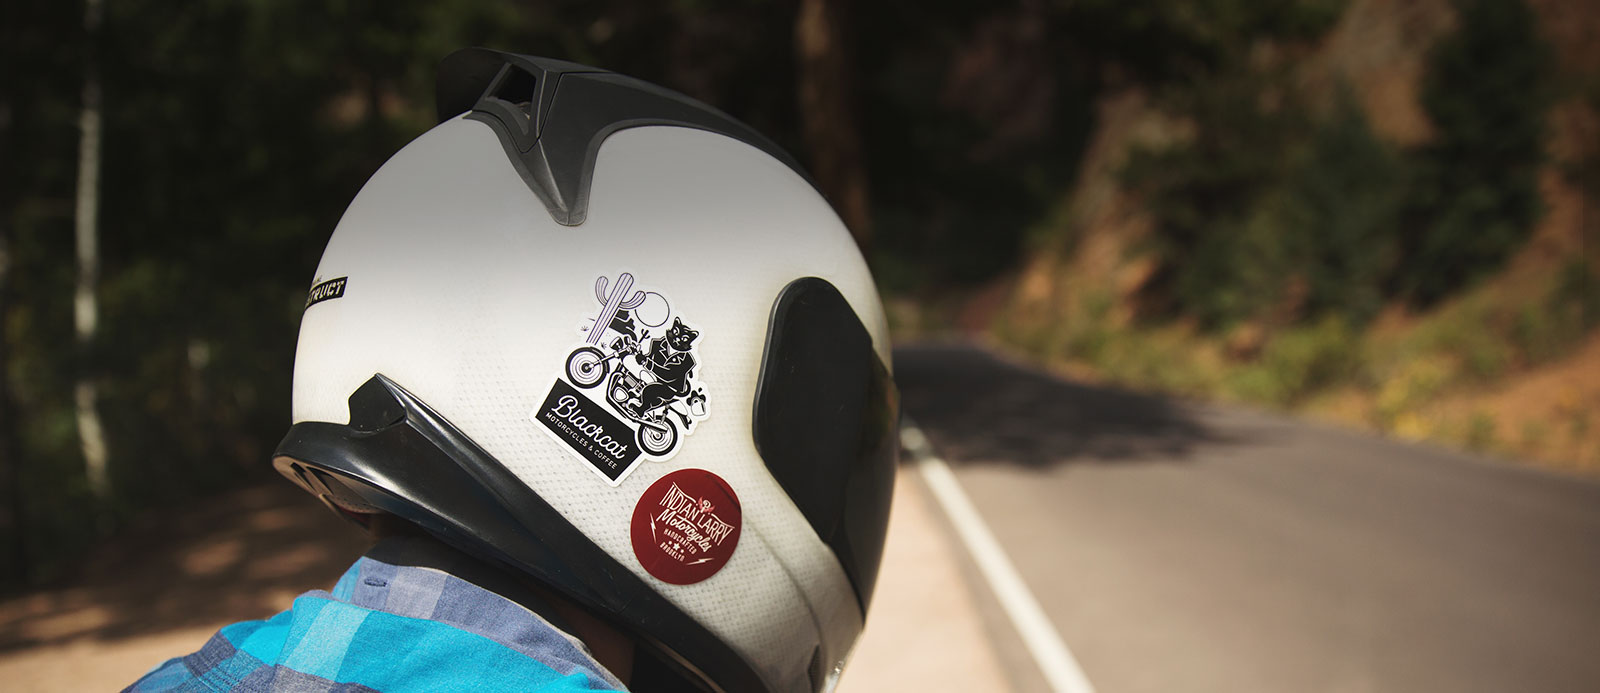 Motorcycle helmet stickers | Sticker Mule Australia